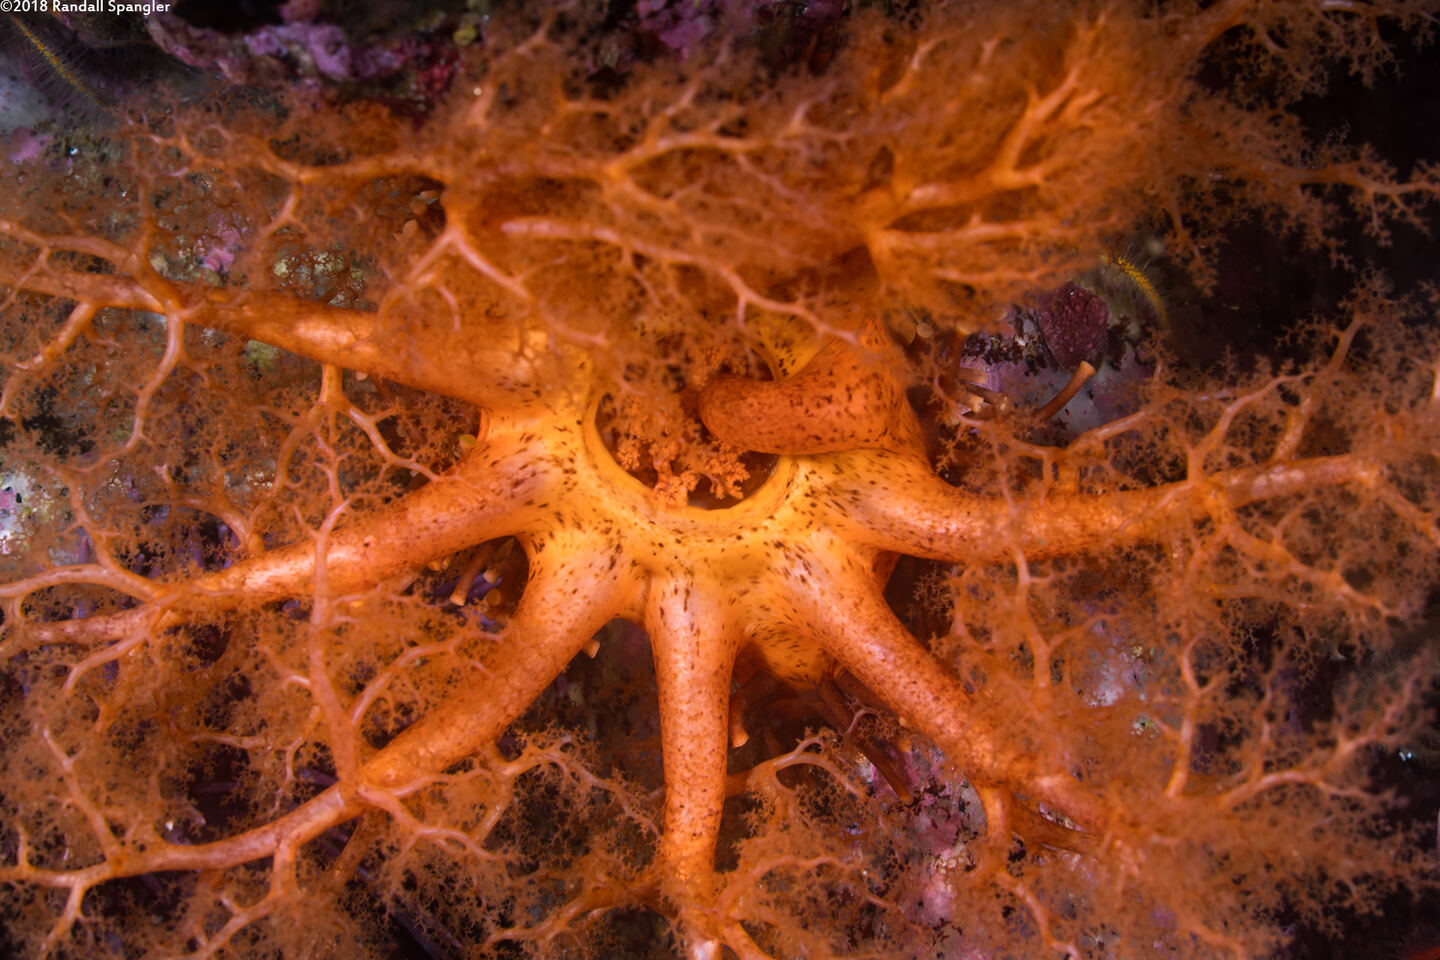 Cucumaria miniata (Orange Sea Cucumber); Stuffing a feeding tentacle in its mouth